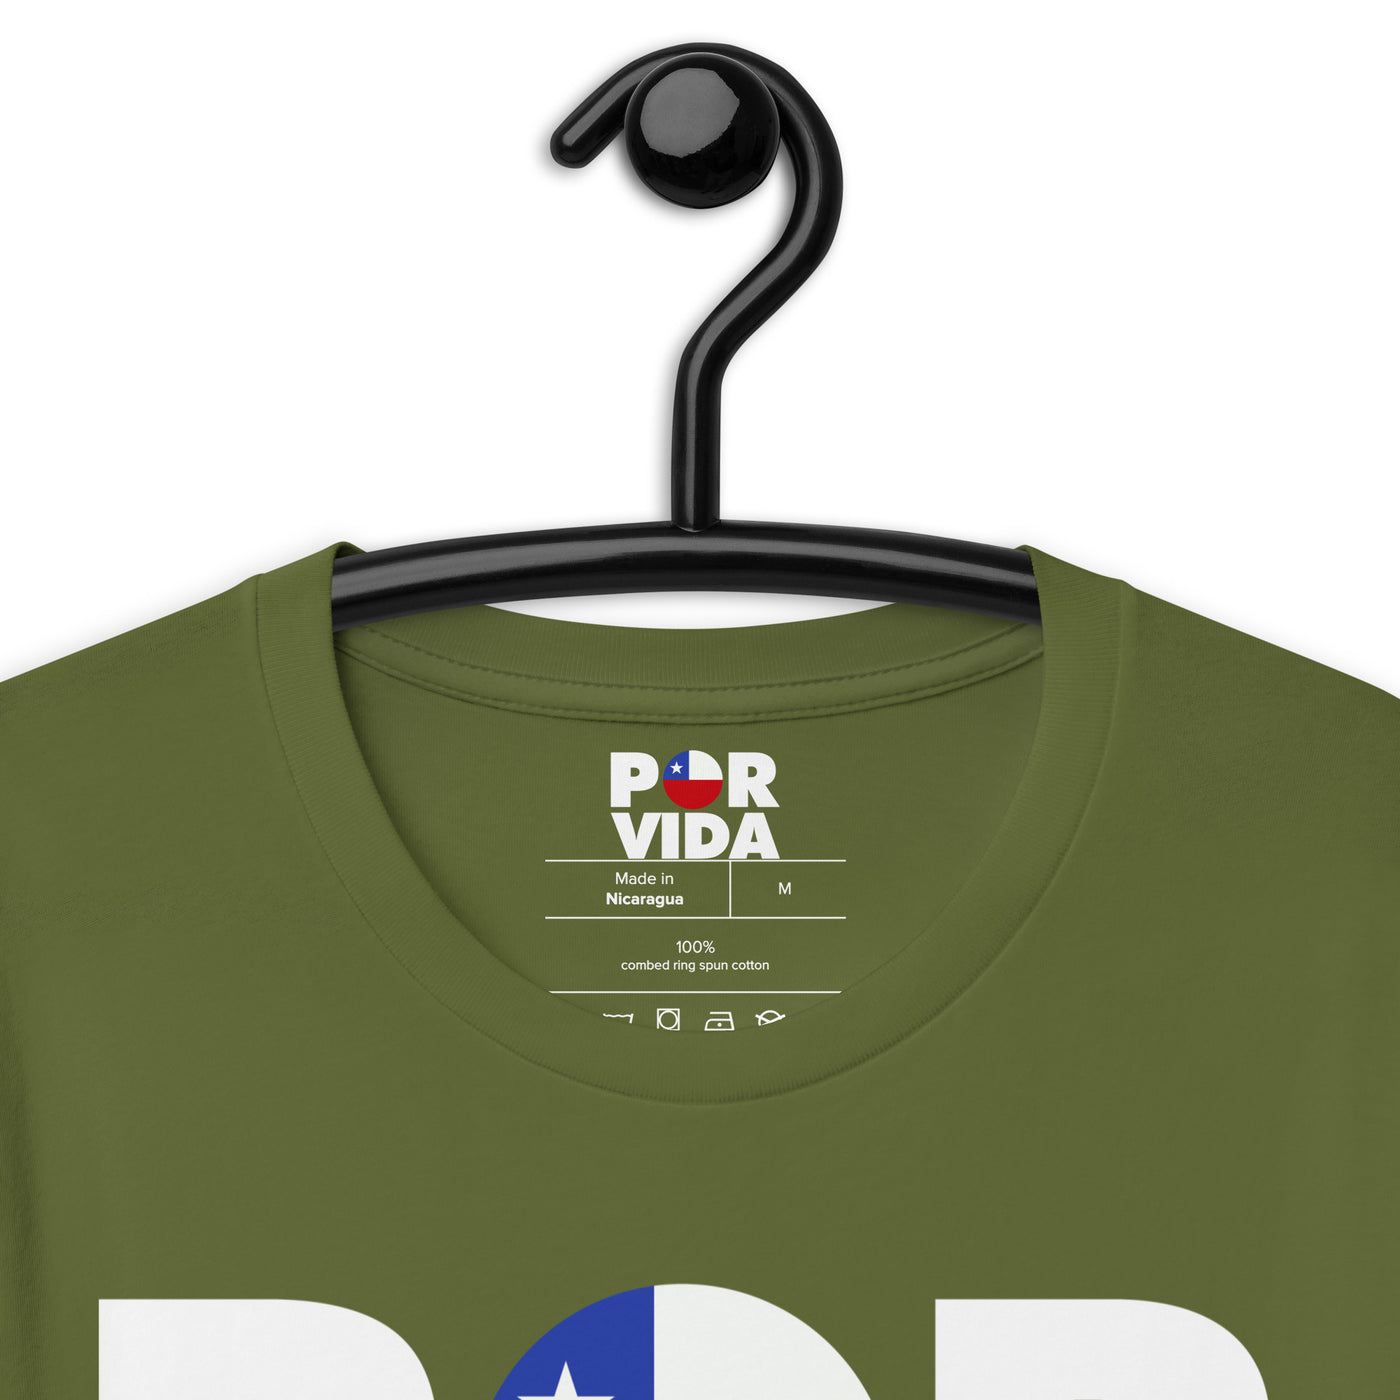 Chile POR VIDA (White Text) Unisex t-shirt